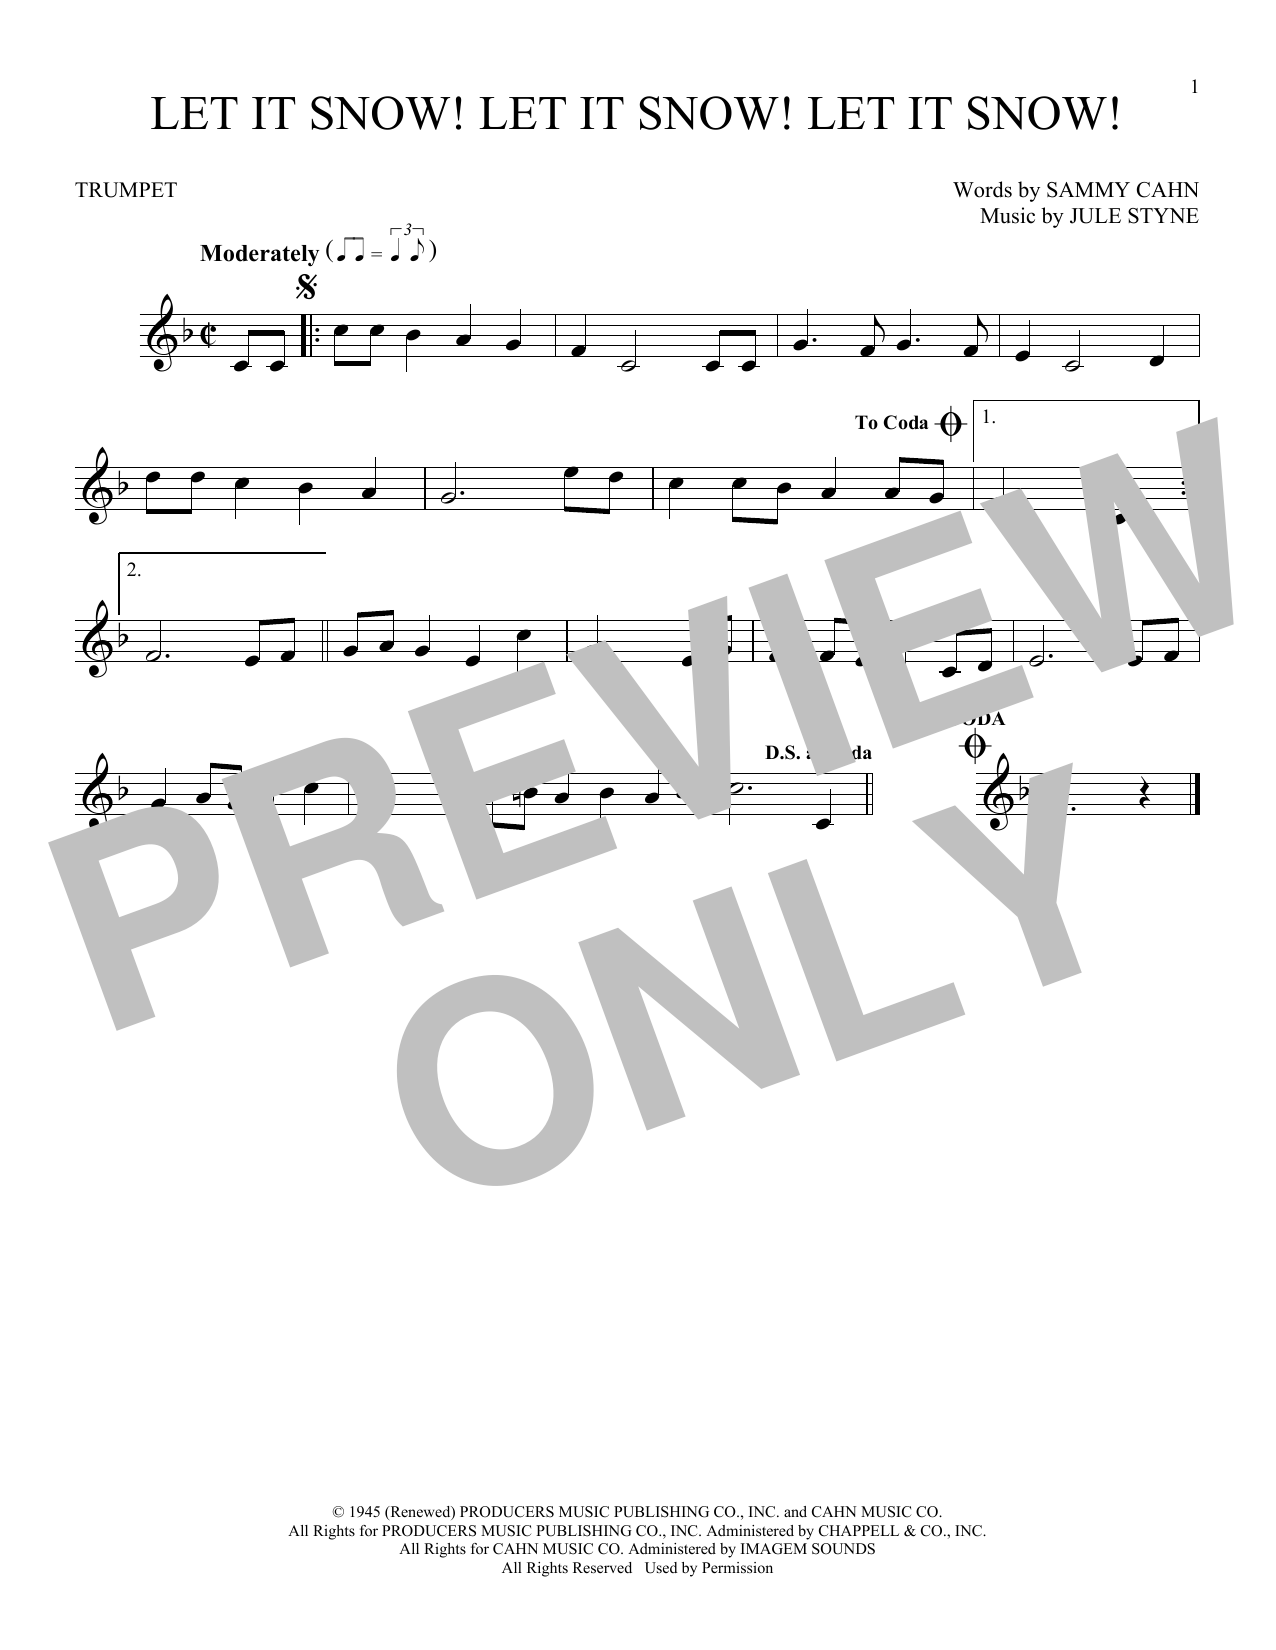 Sammy Cahn & Julie Styne Let It Snow! Let It Snow! Let It Snow! Sheet Music Notes & Chords for Alto Saxophone - Download or Print PDF